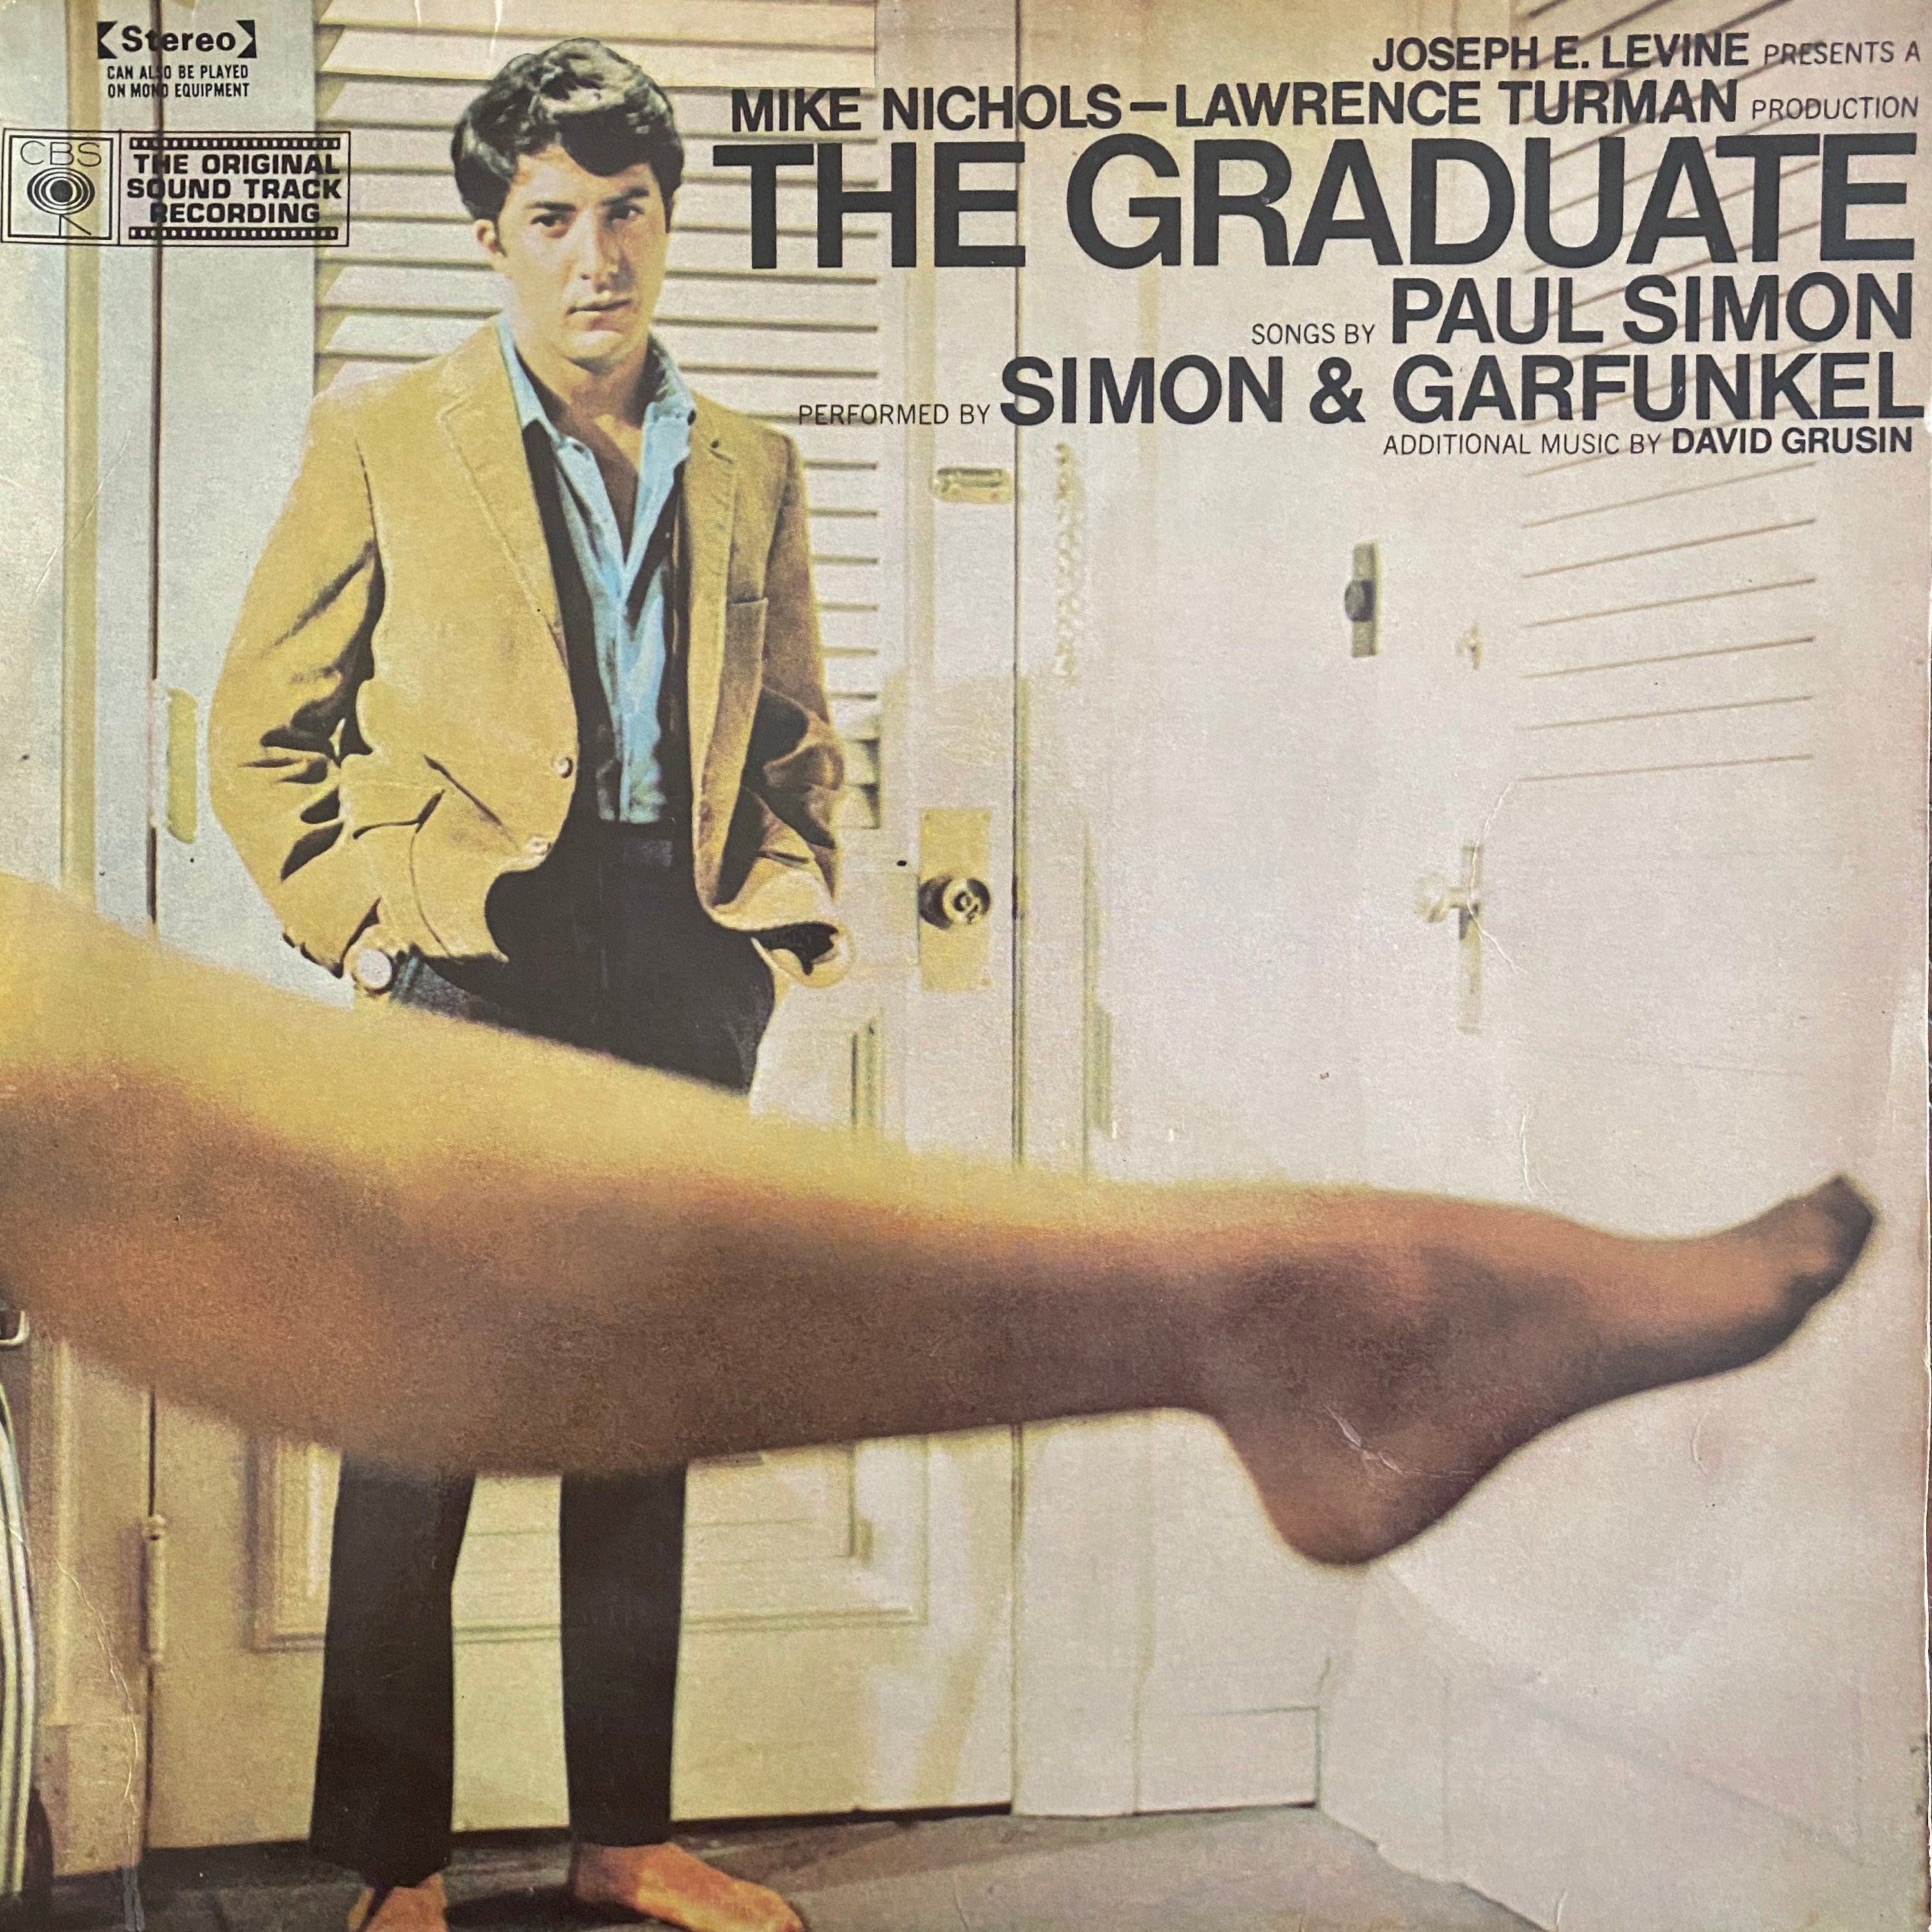 Simon & Garfunkel, Dave Grusin ‎| The Graduate (Original Sound Track Recording)